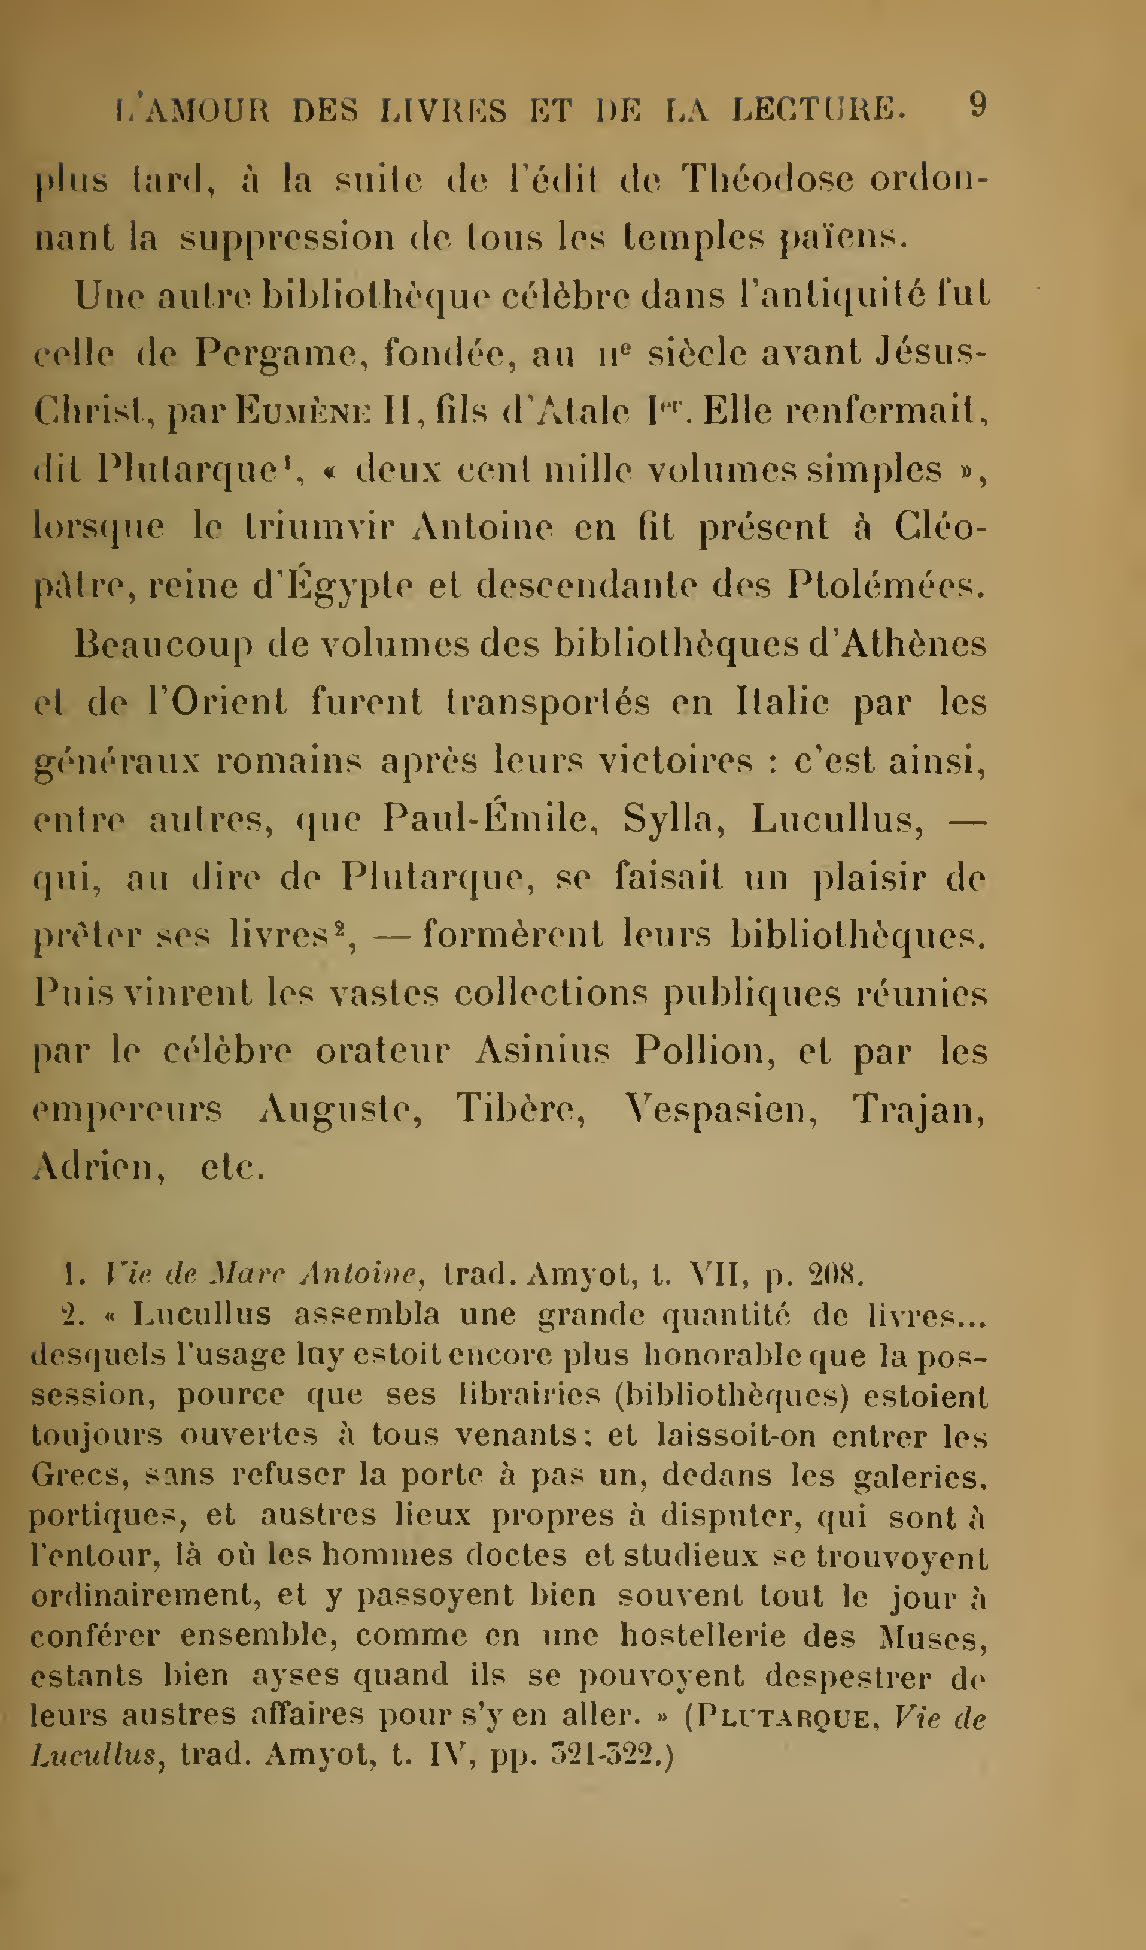 Albert Cim, Le Livre, t. I, p. 9.